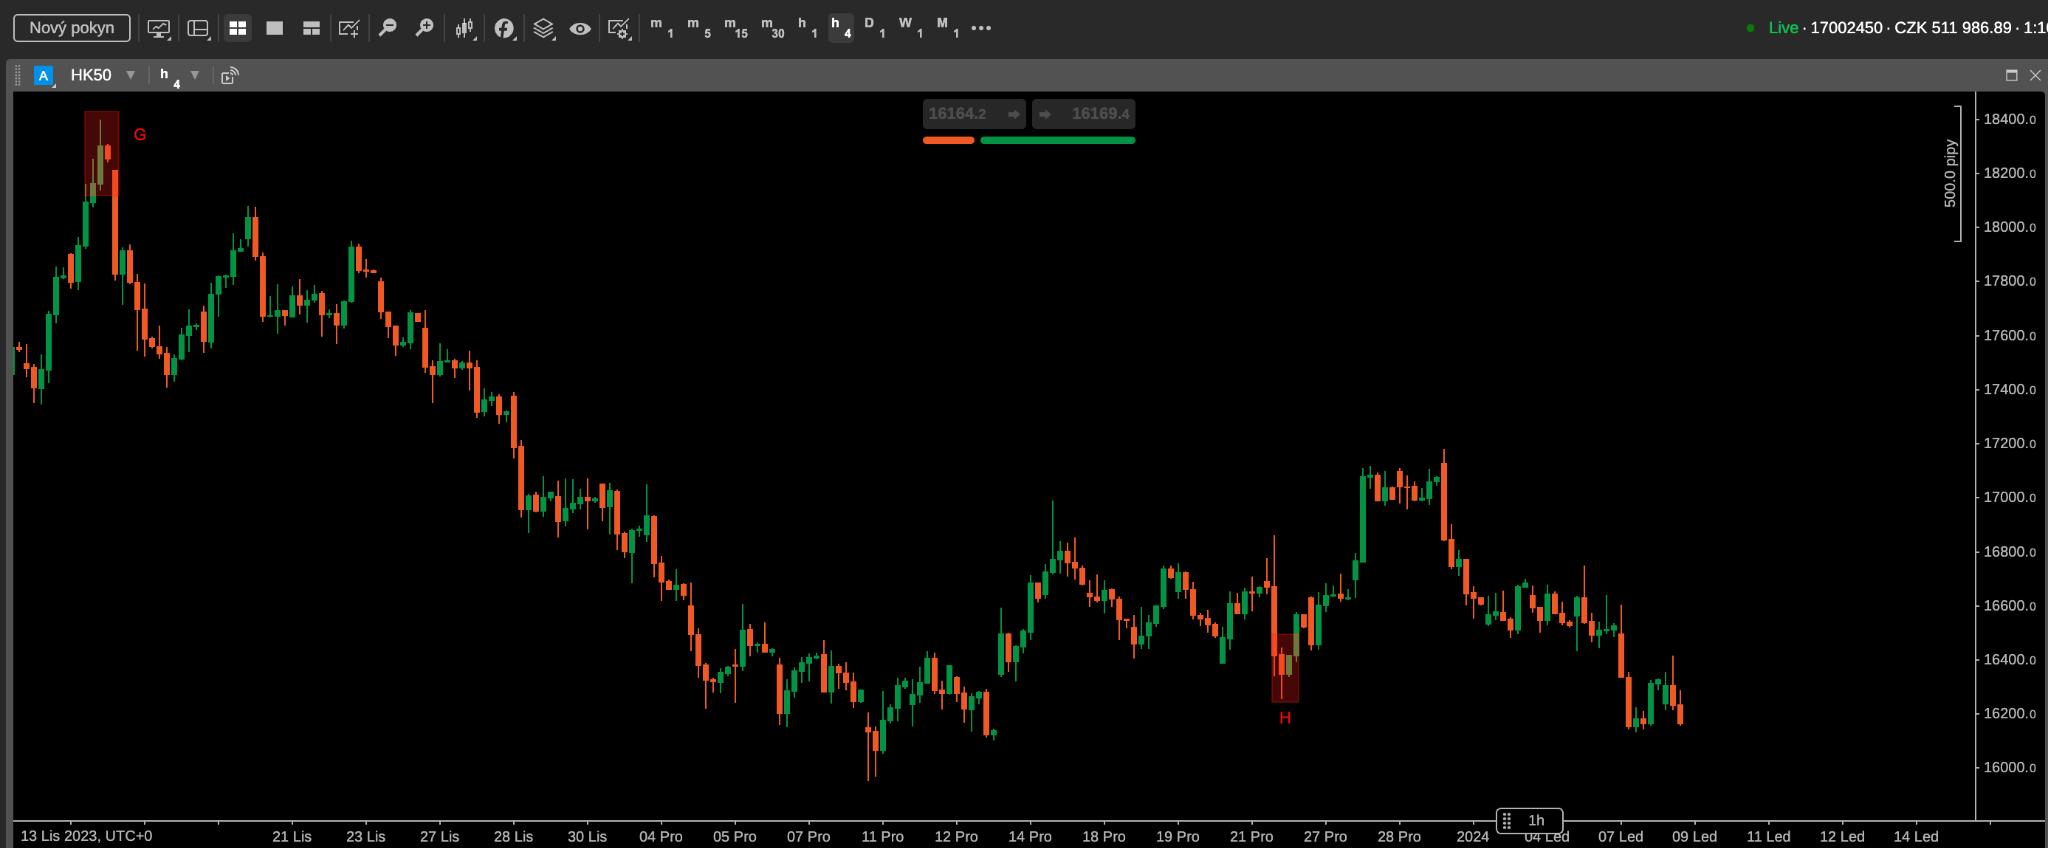 Candlestick pattern bearish harami (G) and bullish harami (H) on HK50 index in cTrader trading platform